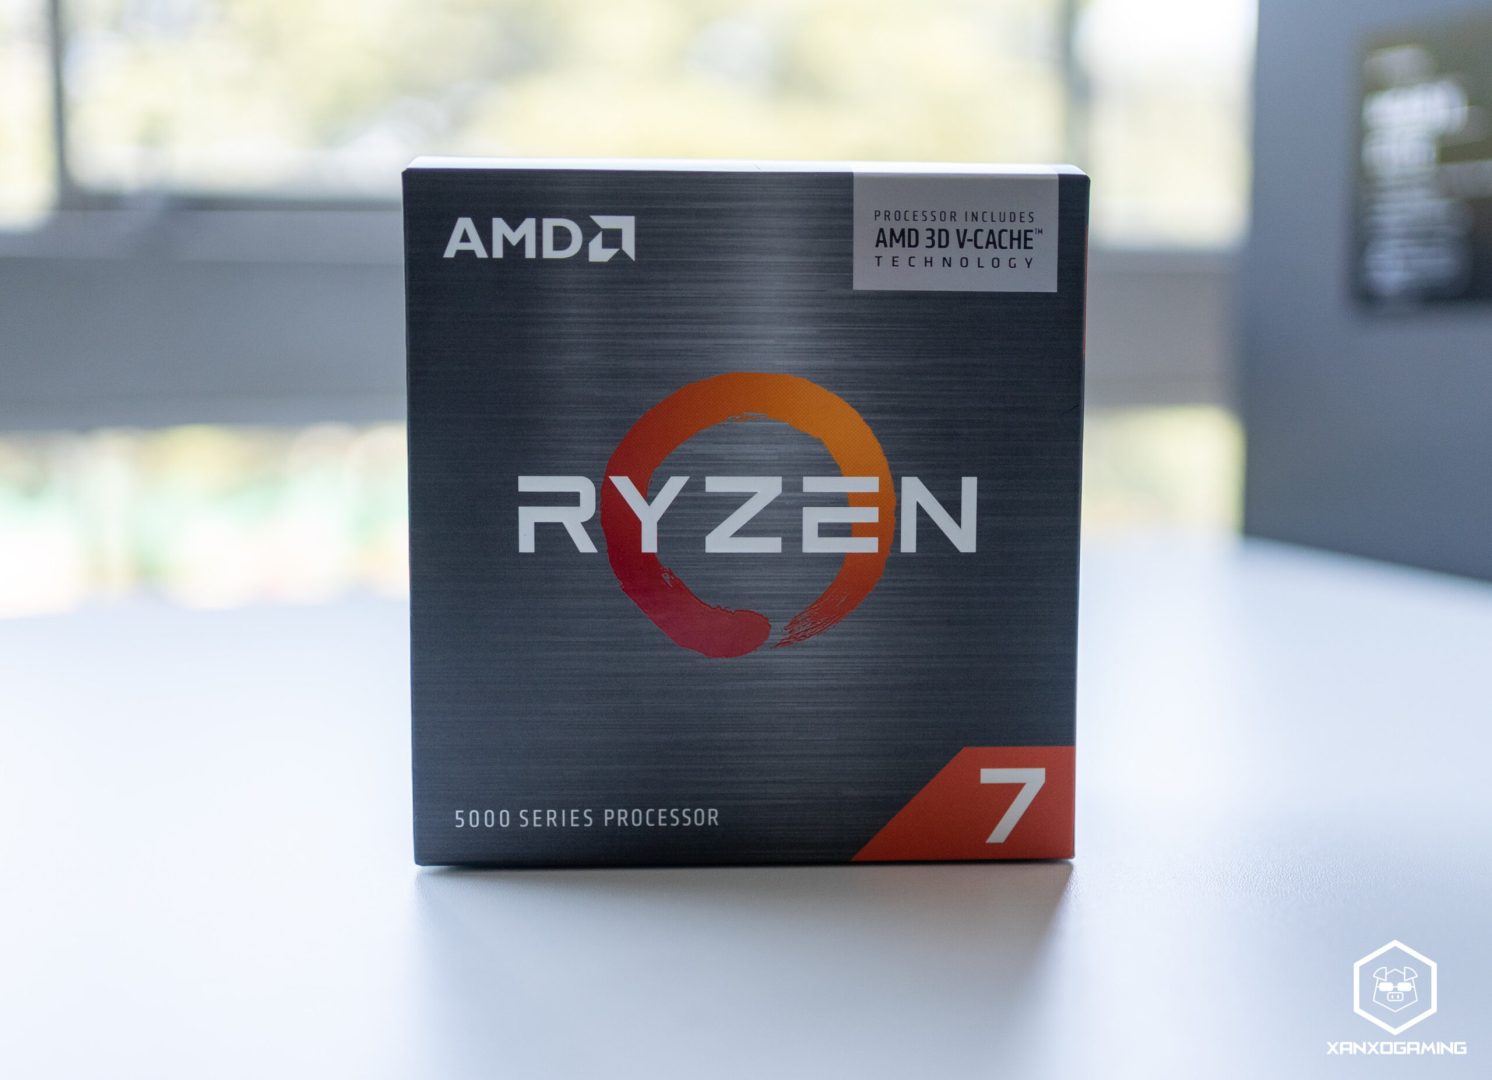 AMD-Ryzen-5800X3D-3D-V-Cache-CPU-Islemci-1492x1080.jpg